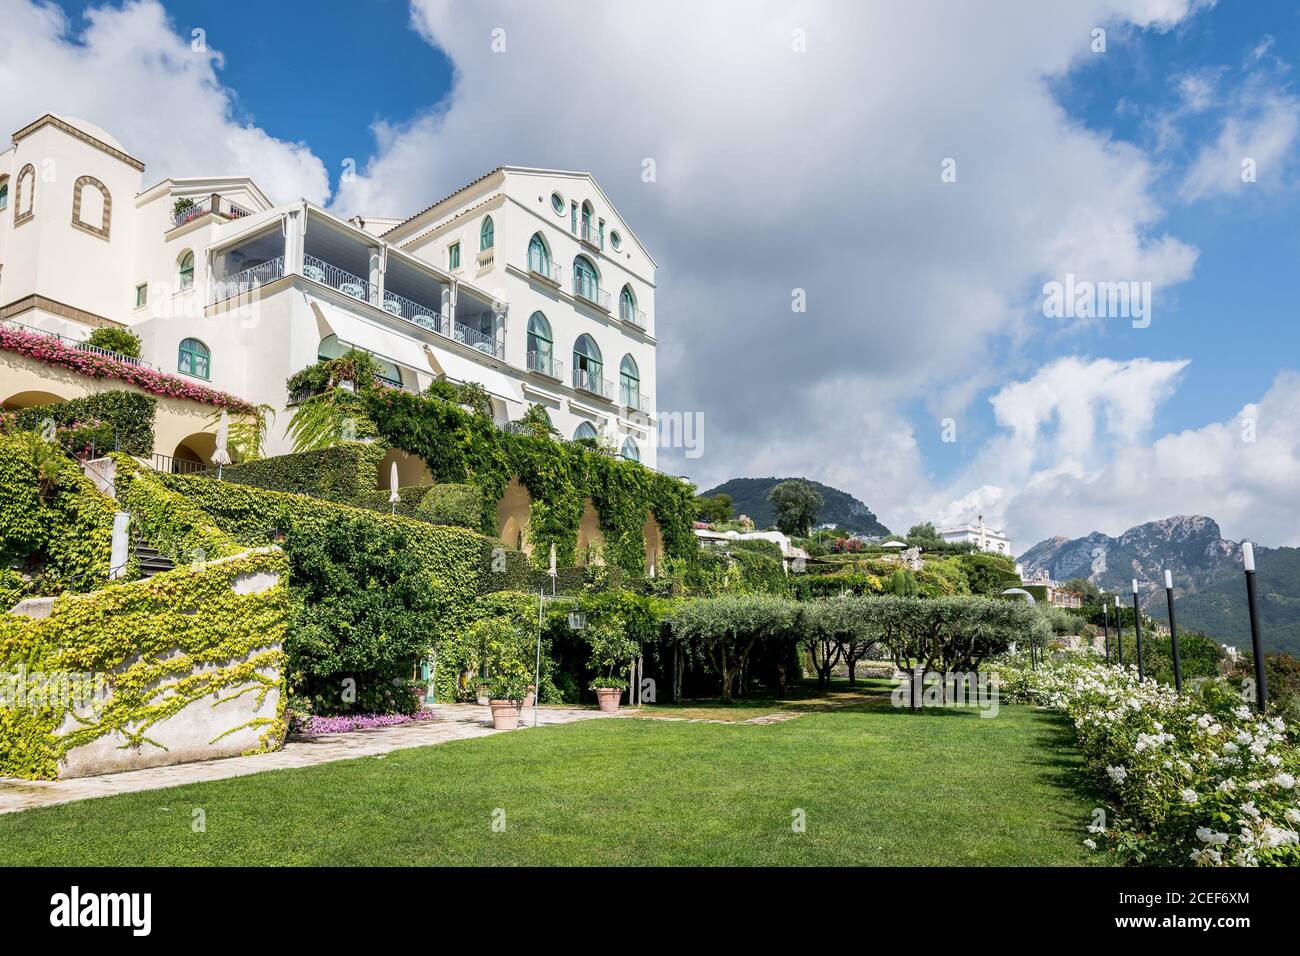 Belmond Hotel Caruso, Amalfi Coast, Luxury Hotels in Italy